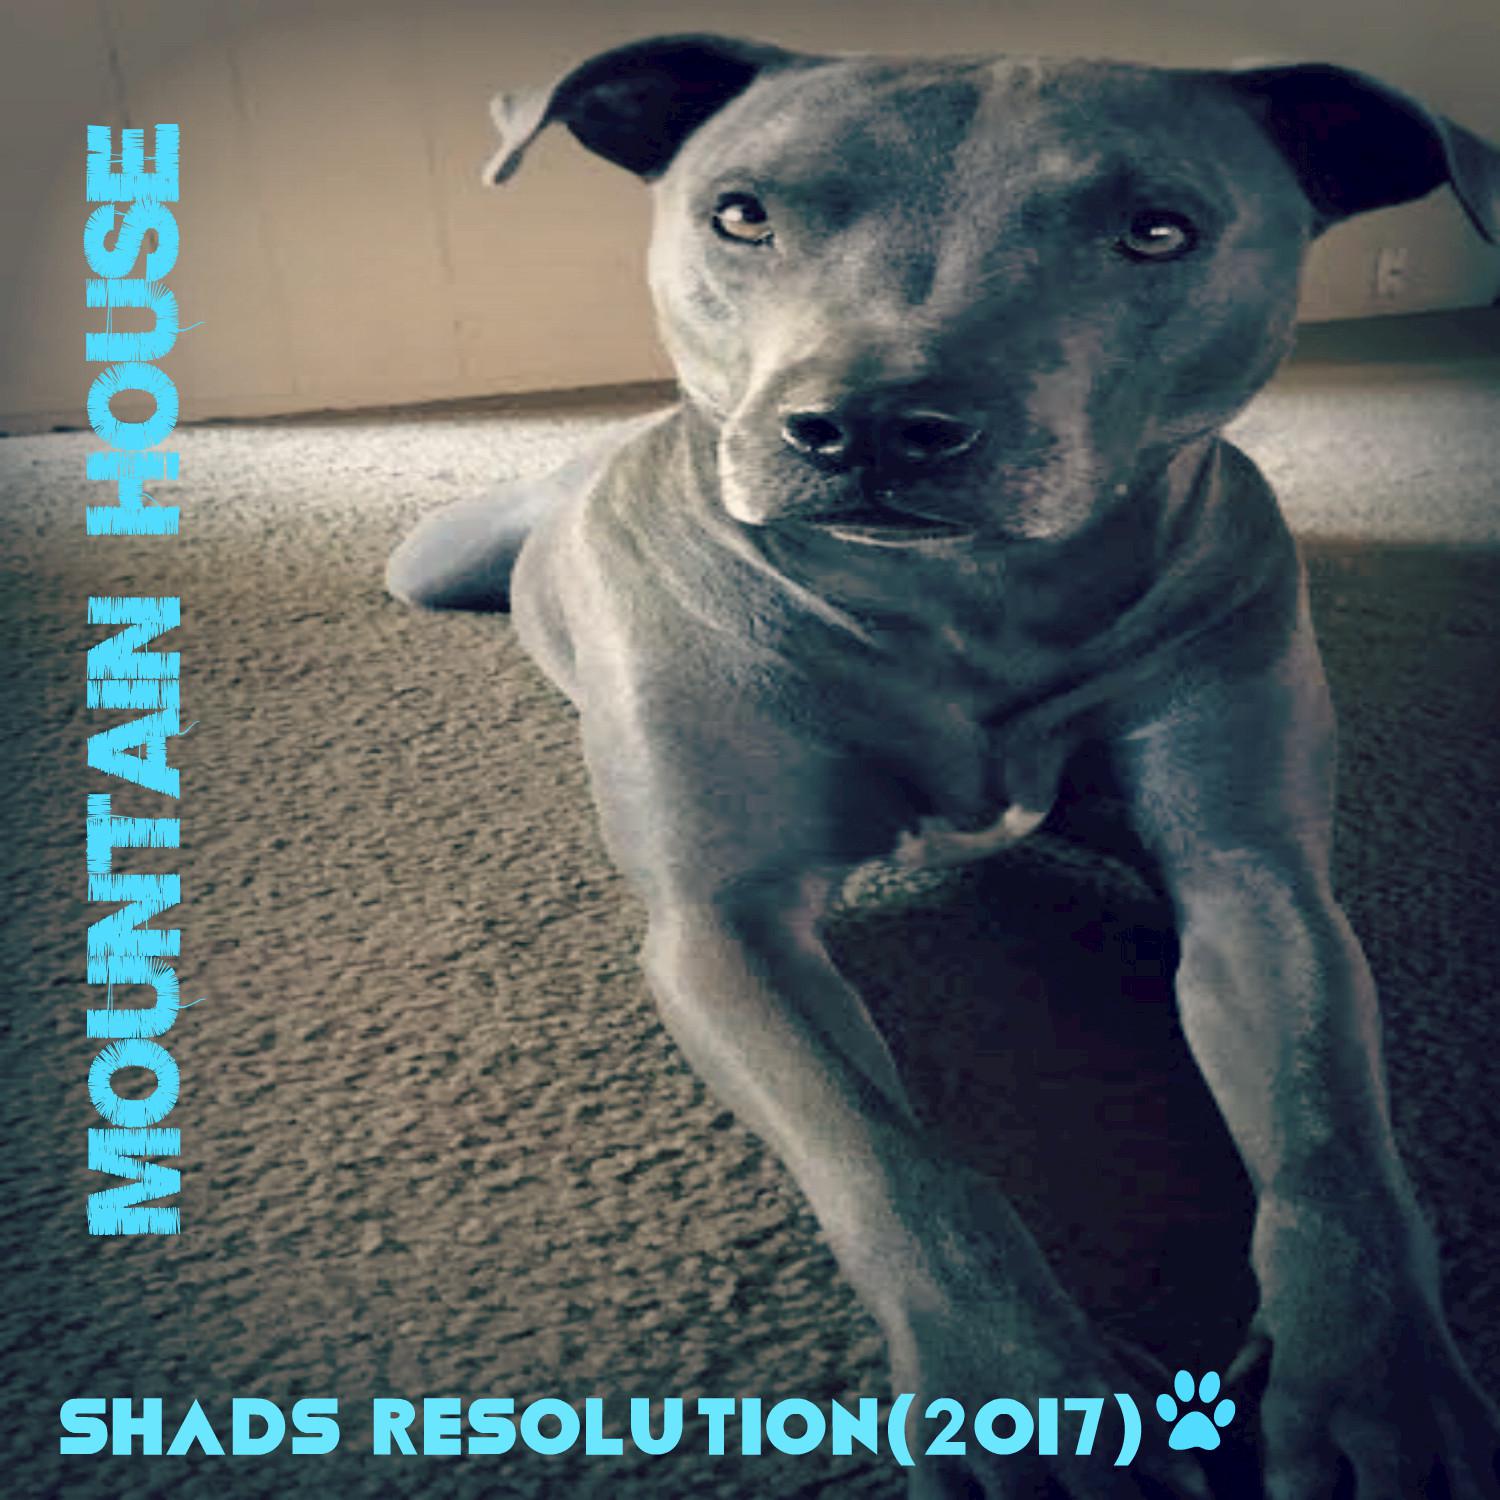 Shads Resolution 2017